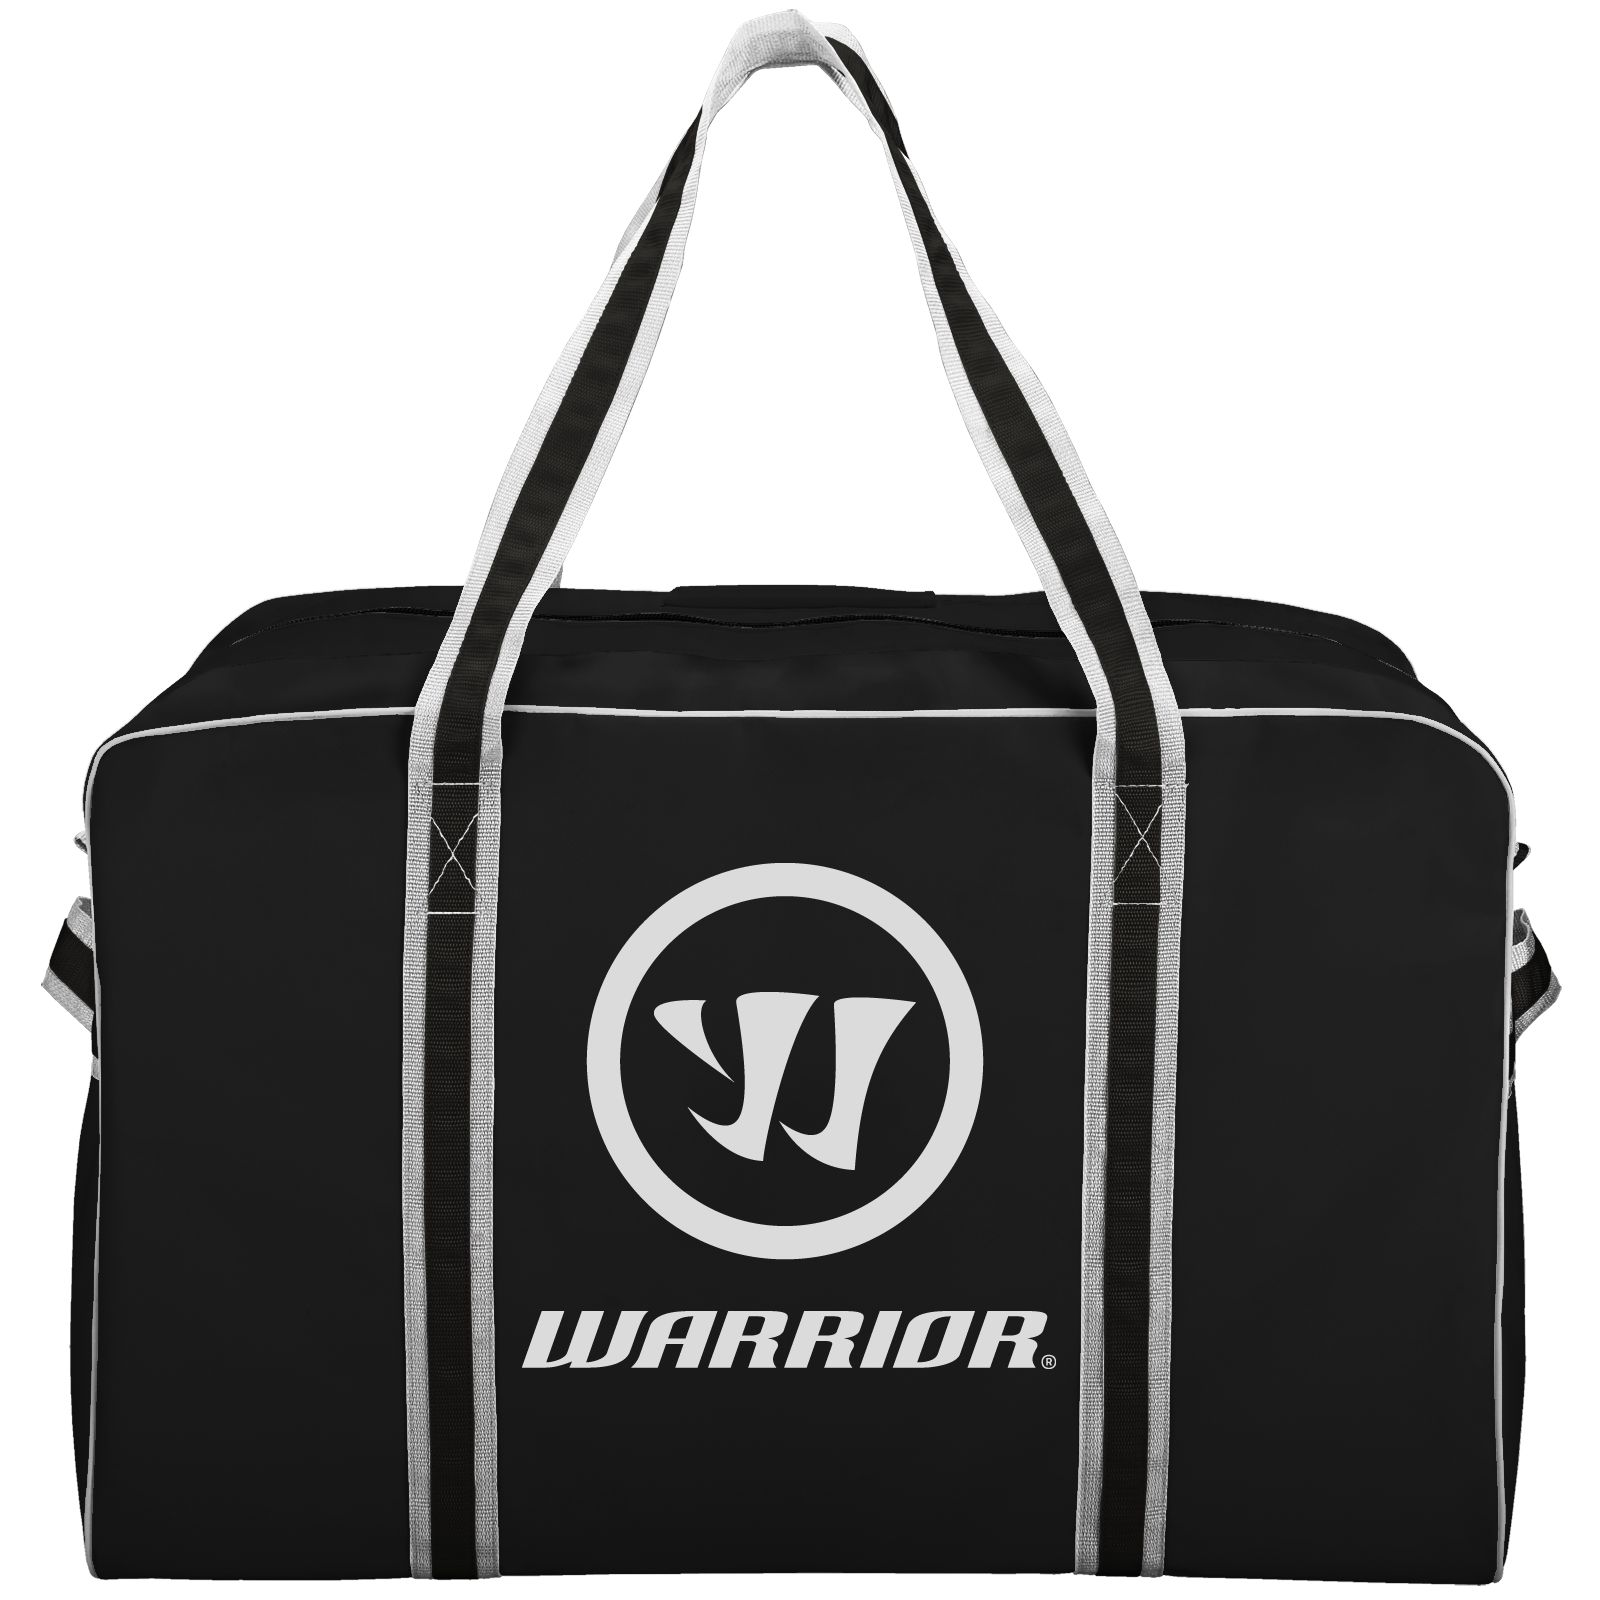 Warrior Pro Bag, Black with White image number 0